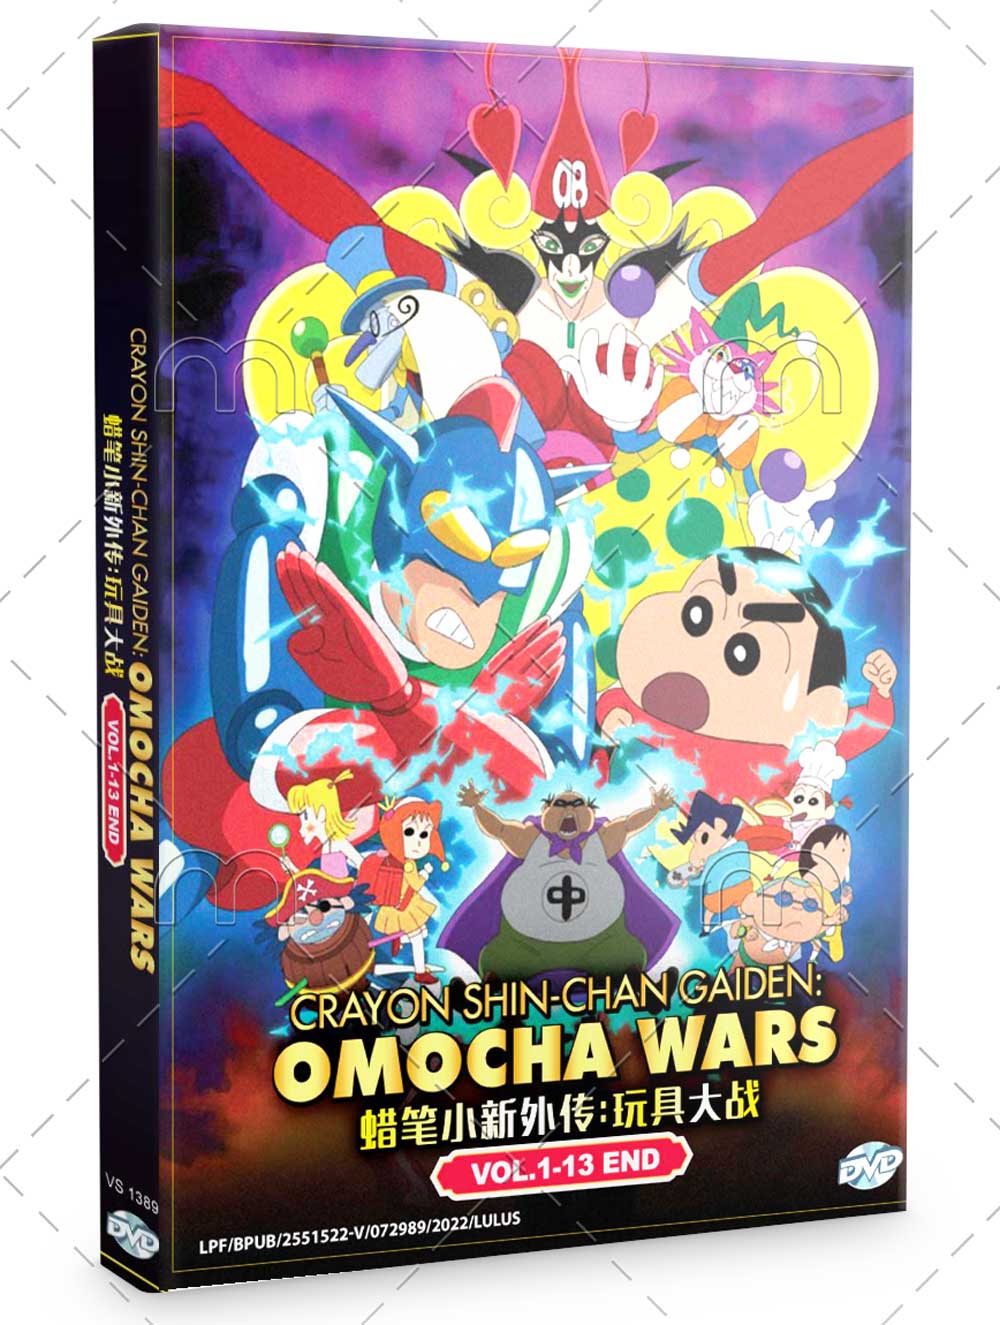 Crayon Shin-chan Gaiden: Omocha Wars (DVD) (2016-2017) Anime | Ep